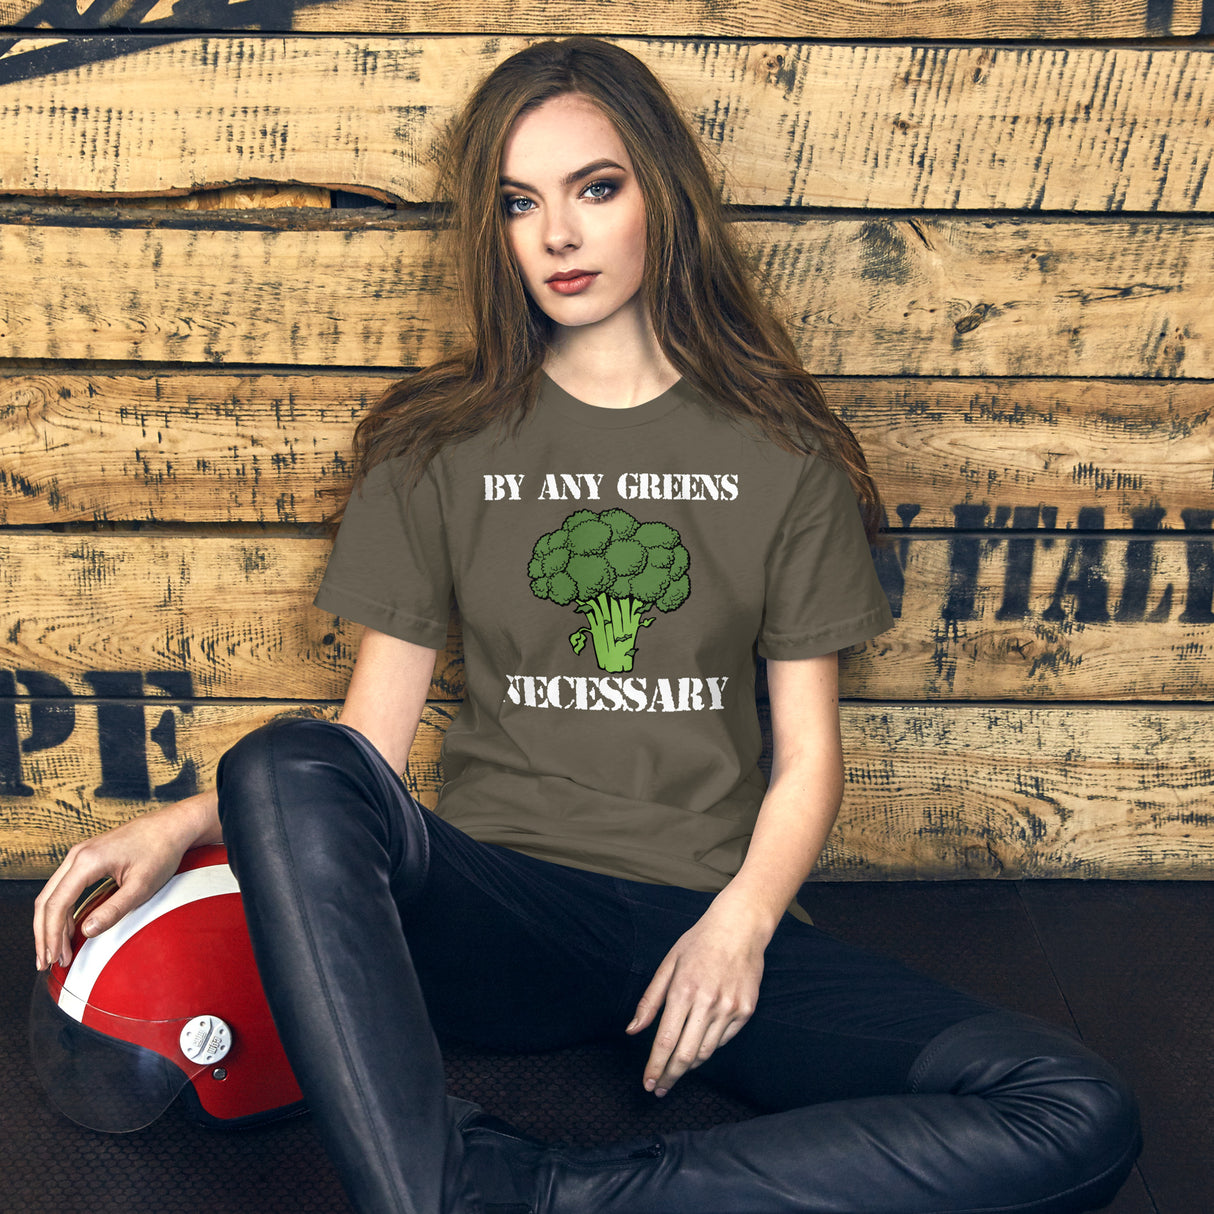 By Any Greens Necessary Women's Shirt